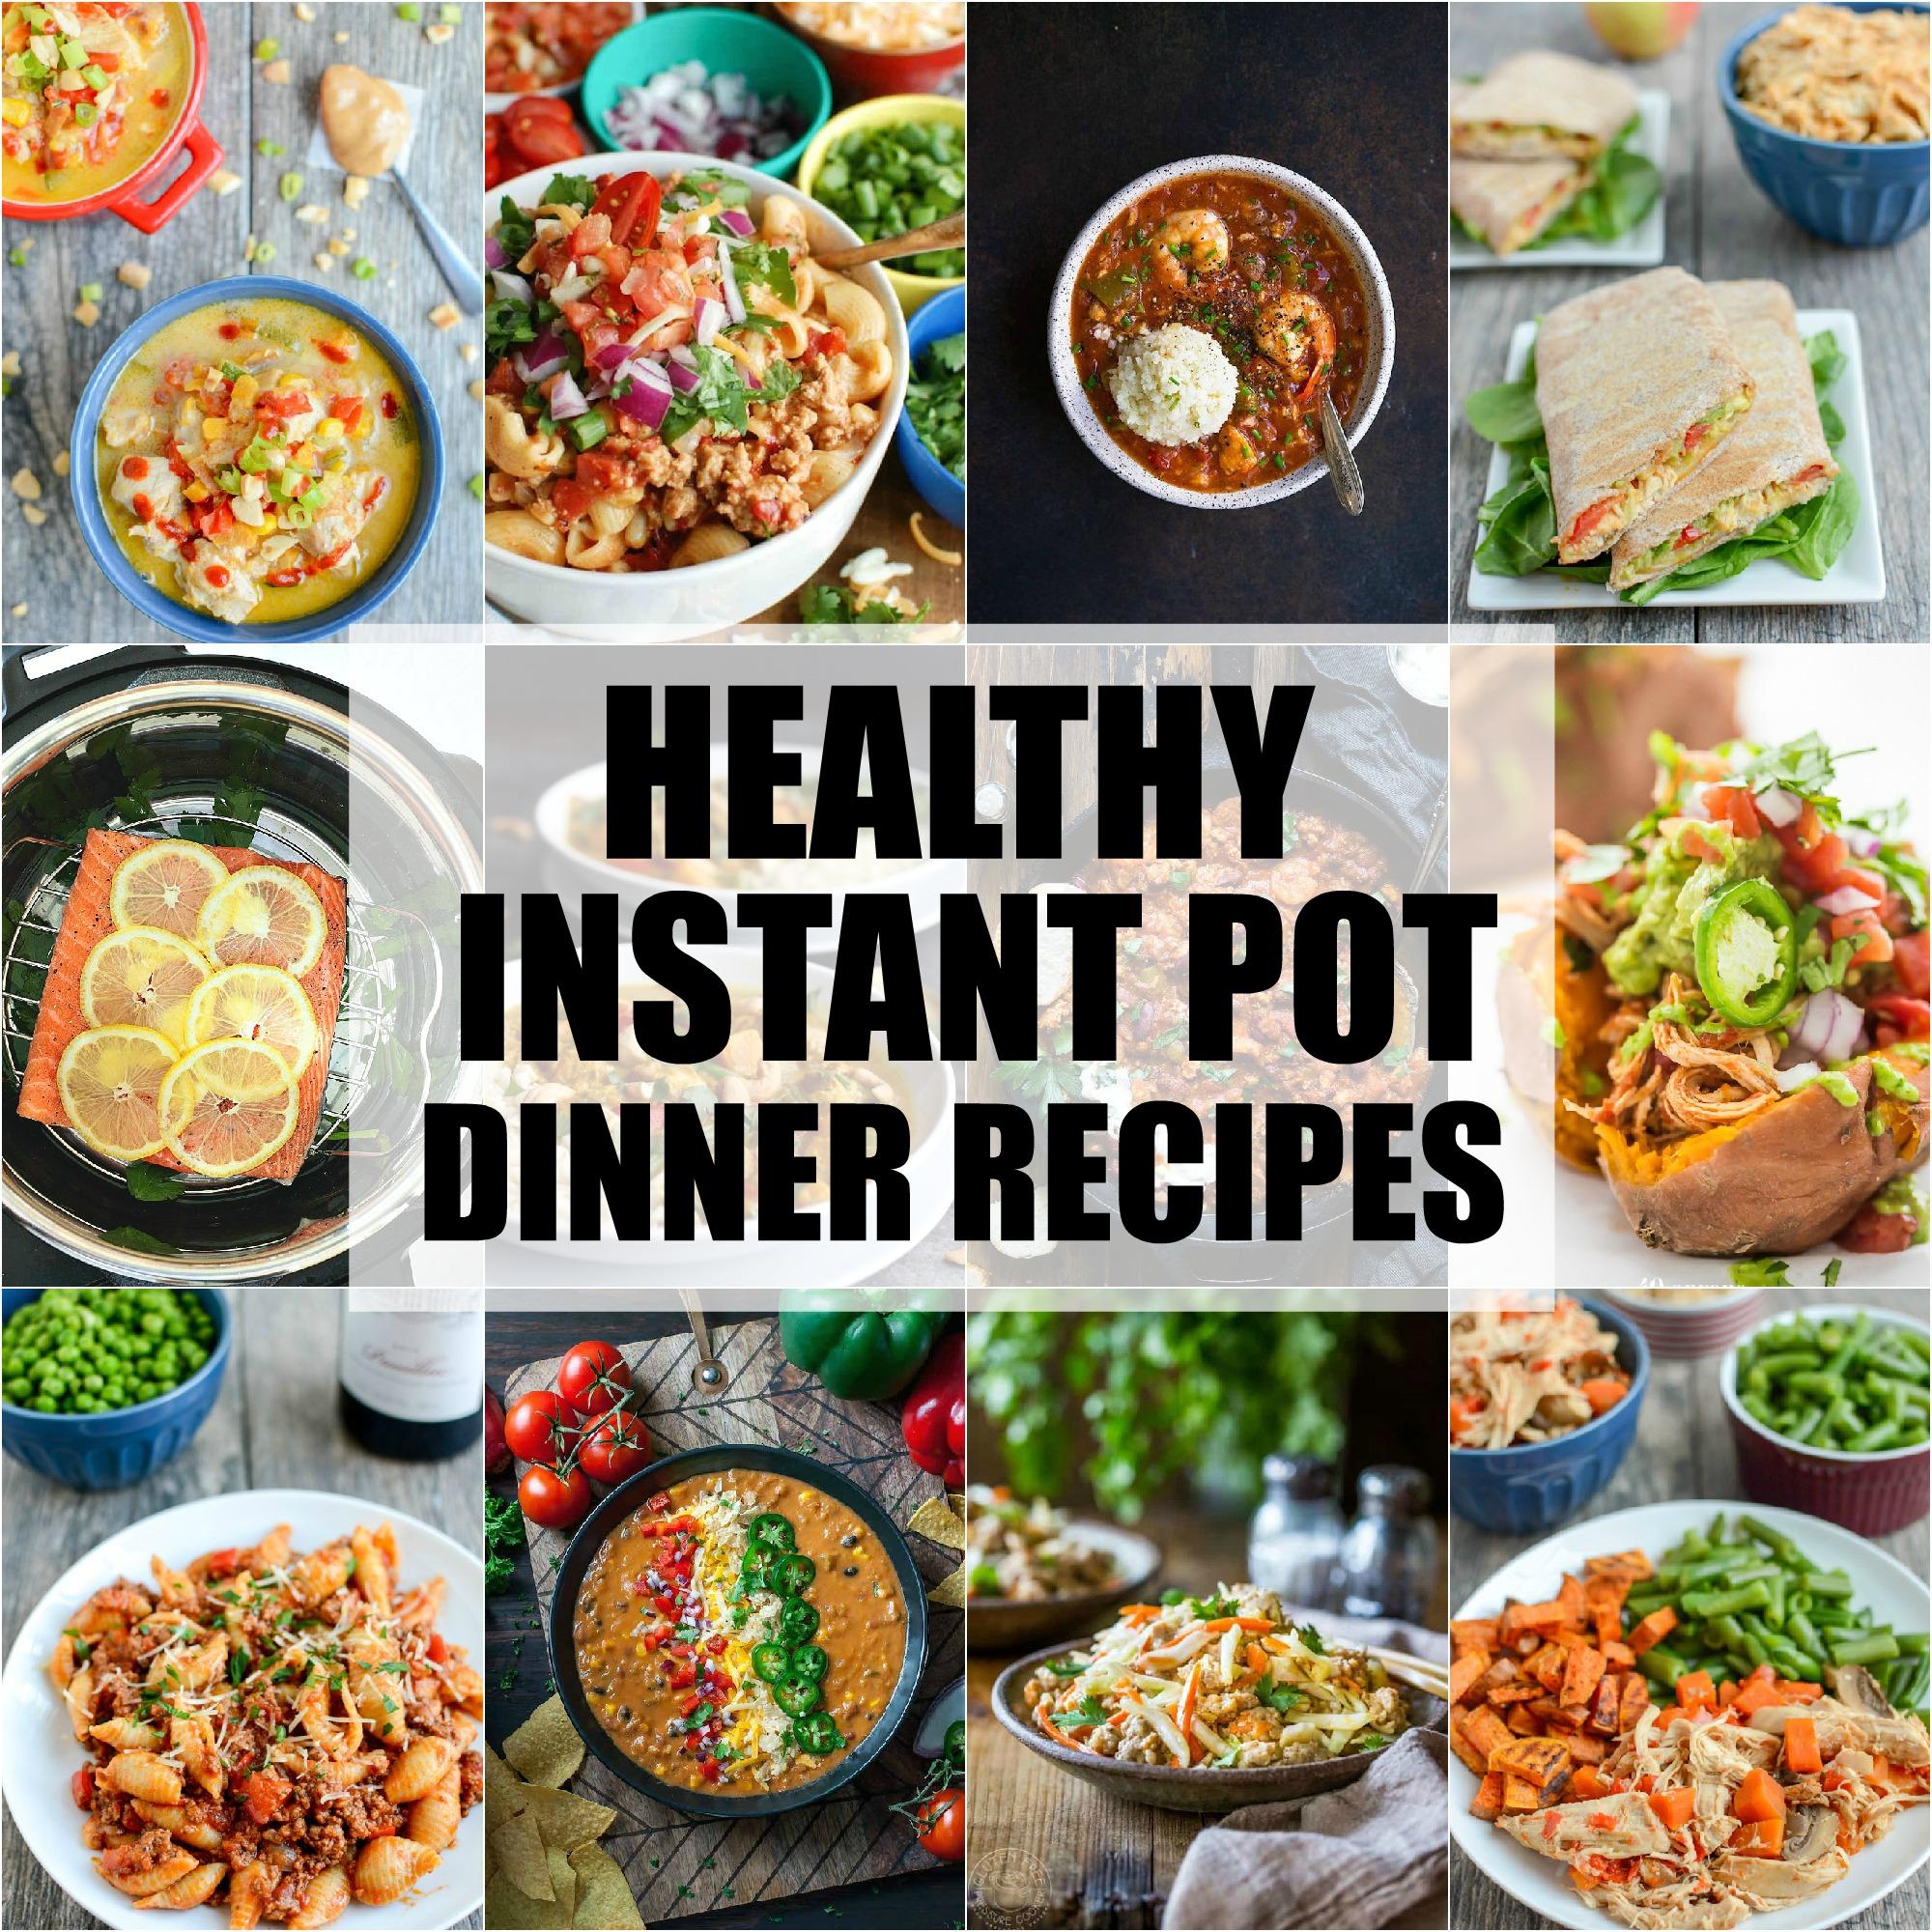 https://www.theleangreenbean.com/wp-content/uploads/2017/11/instant-pot-dinner-recipes-square.jpg